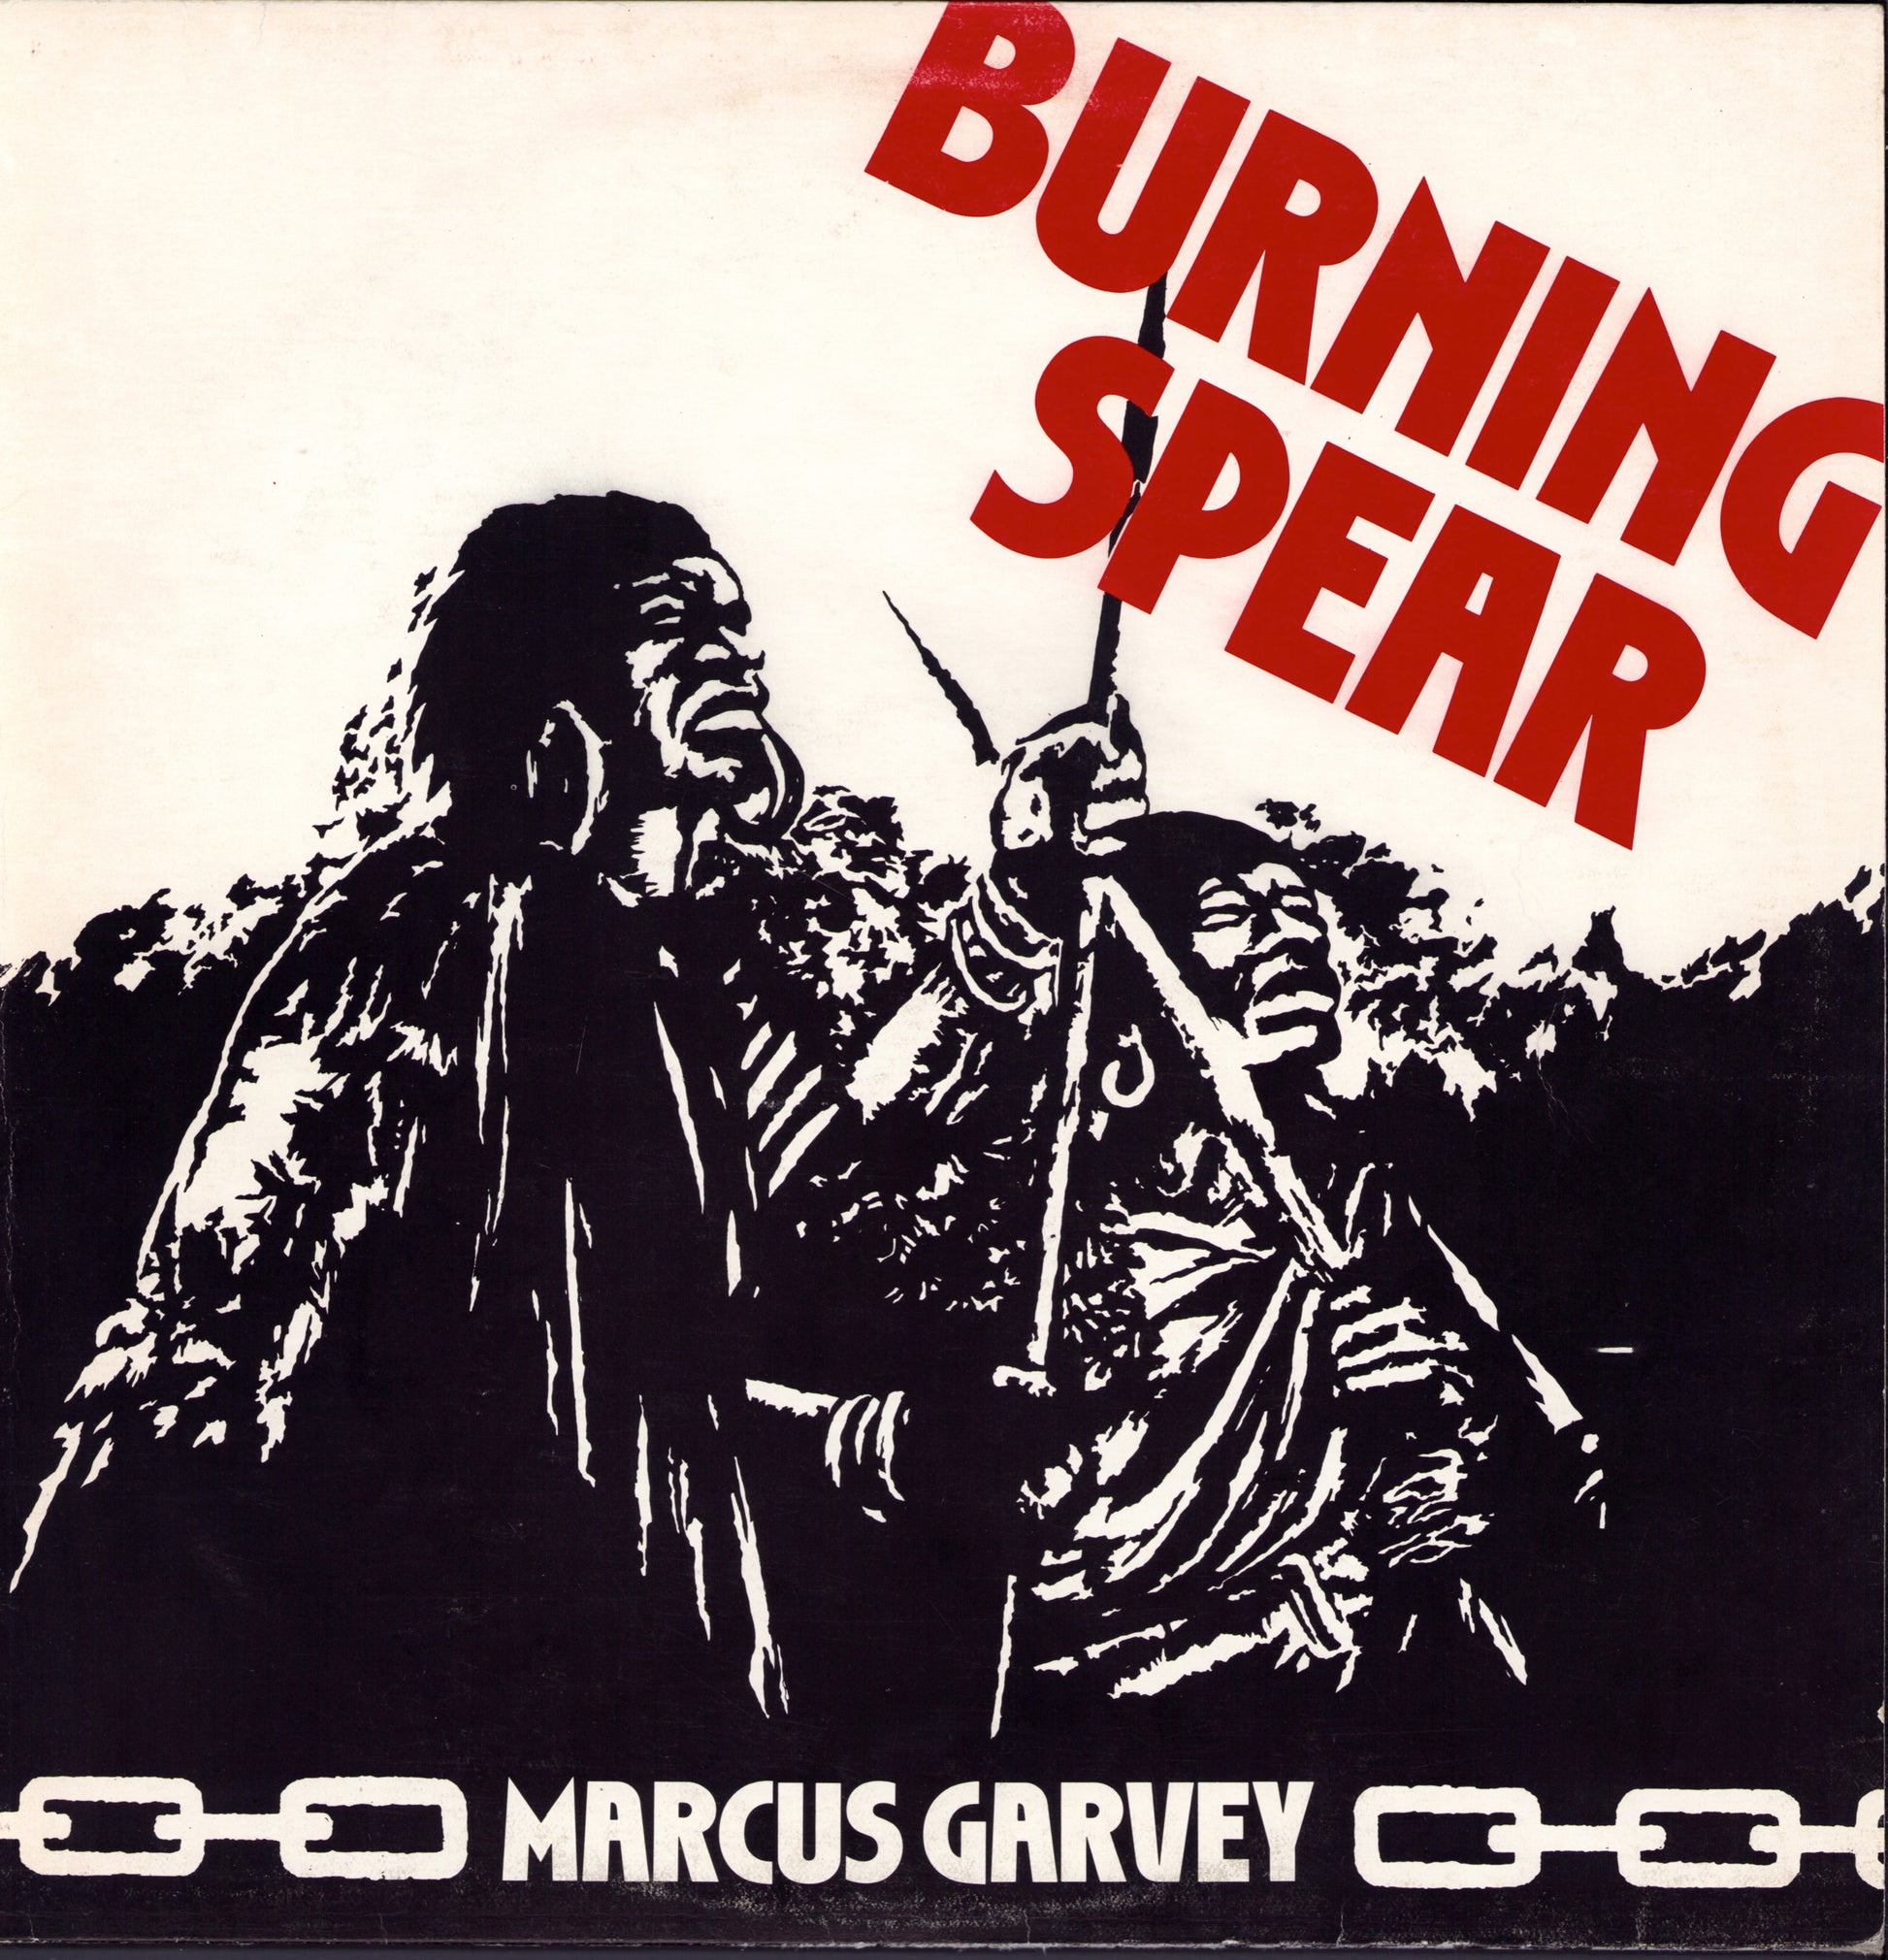 Burning Spear - Marcus Garvey (Vinyl LP)